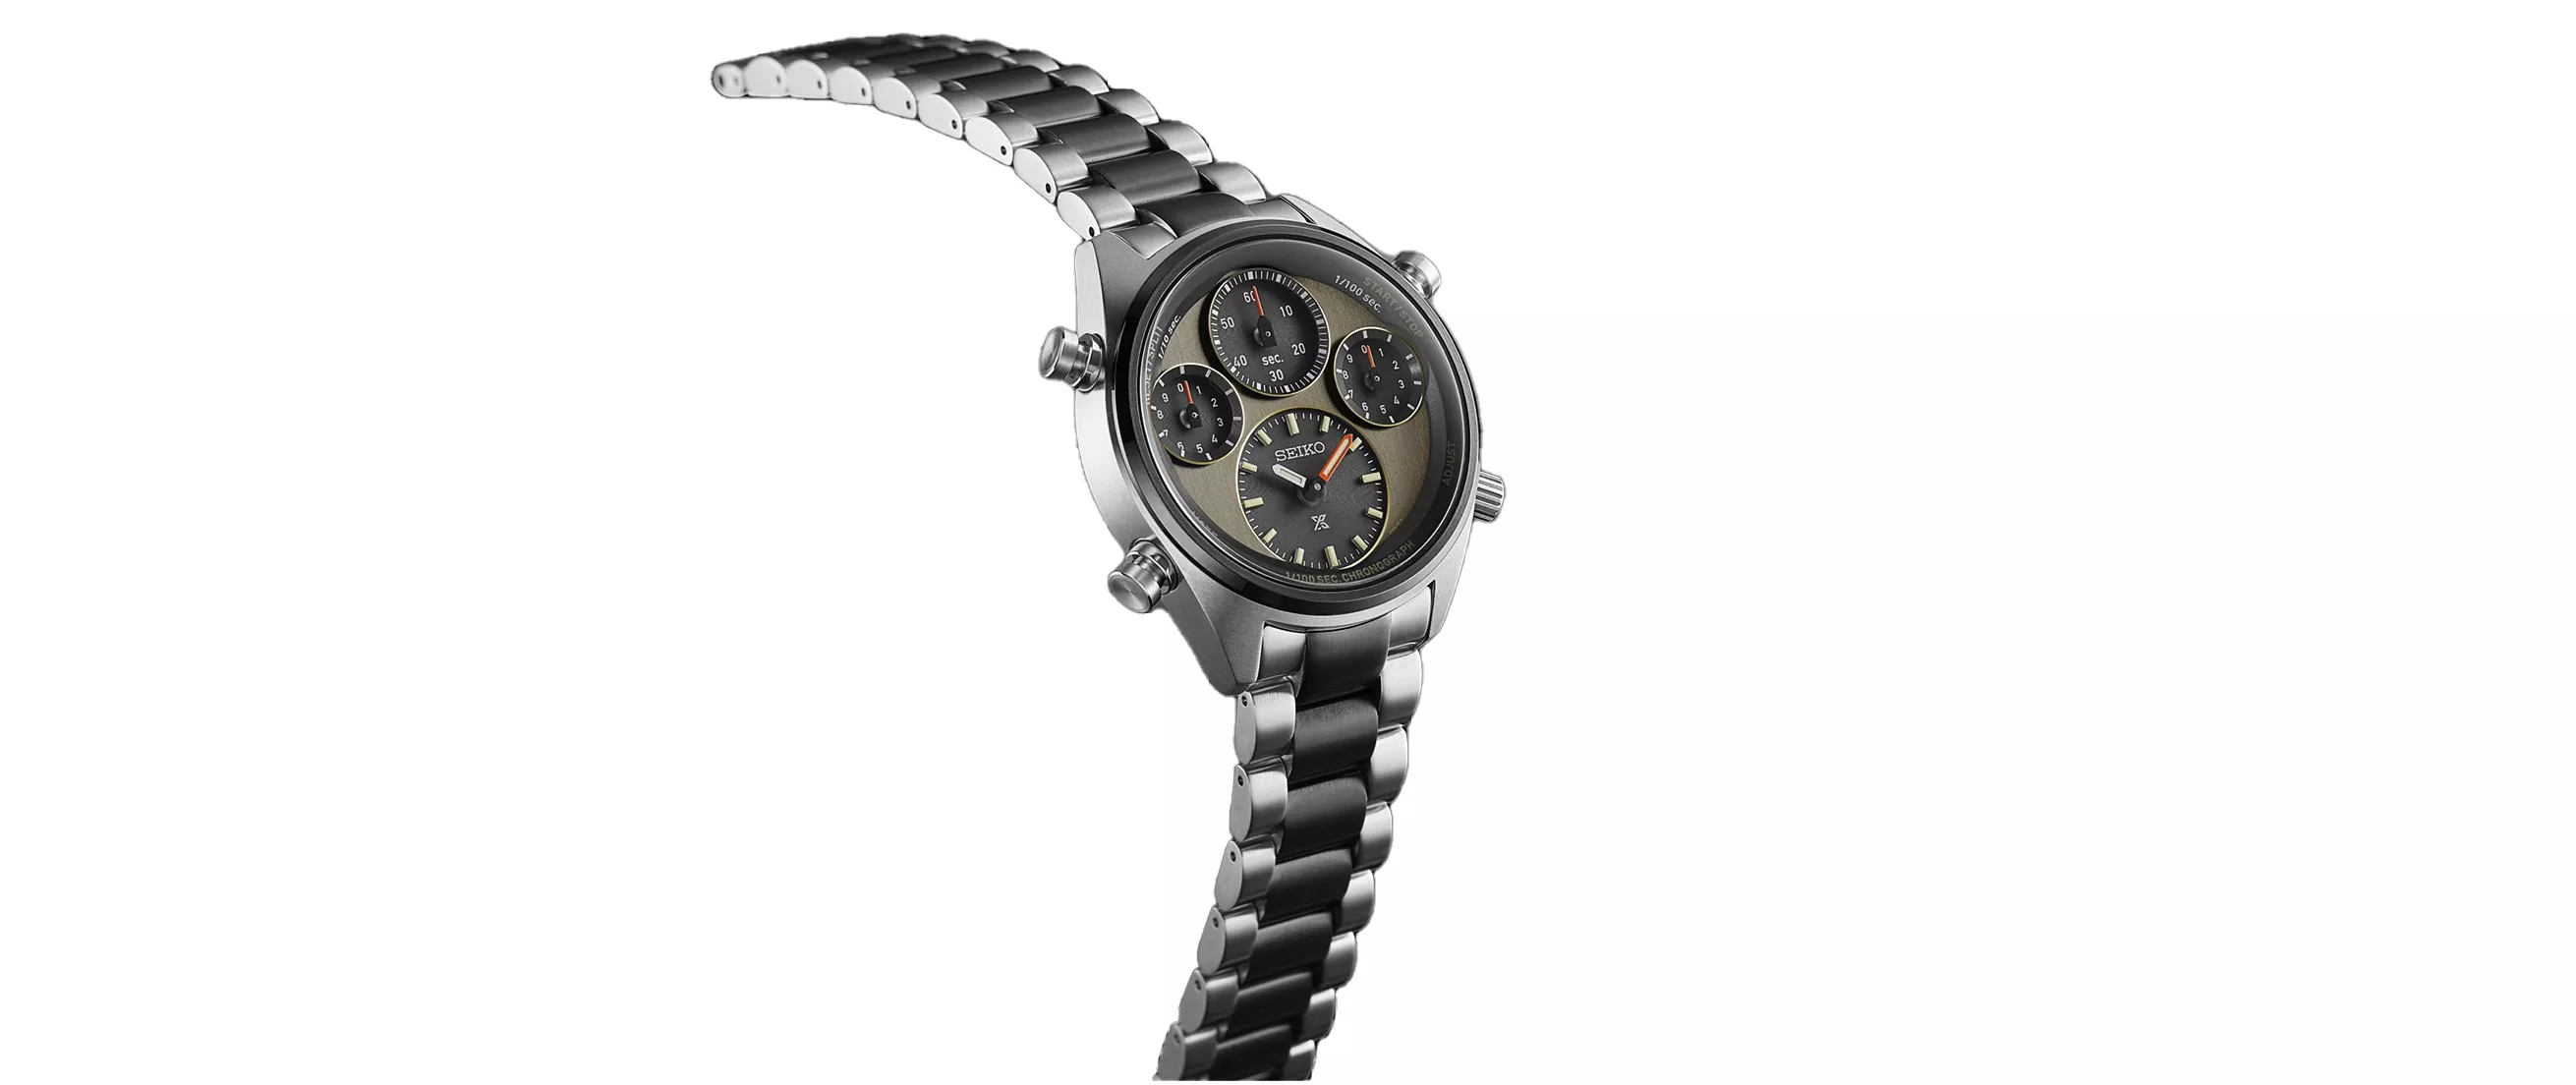 Seiko SFJ005P1 Strategische Uhr, Prospex Speedtimer Solar Chronograph Limited Edition (Solar)